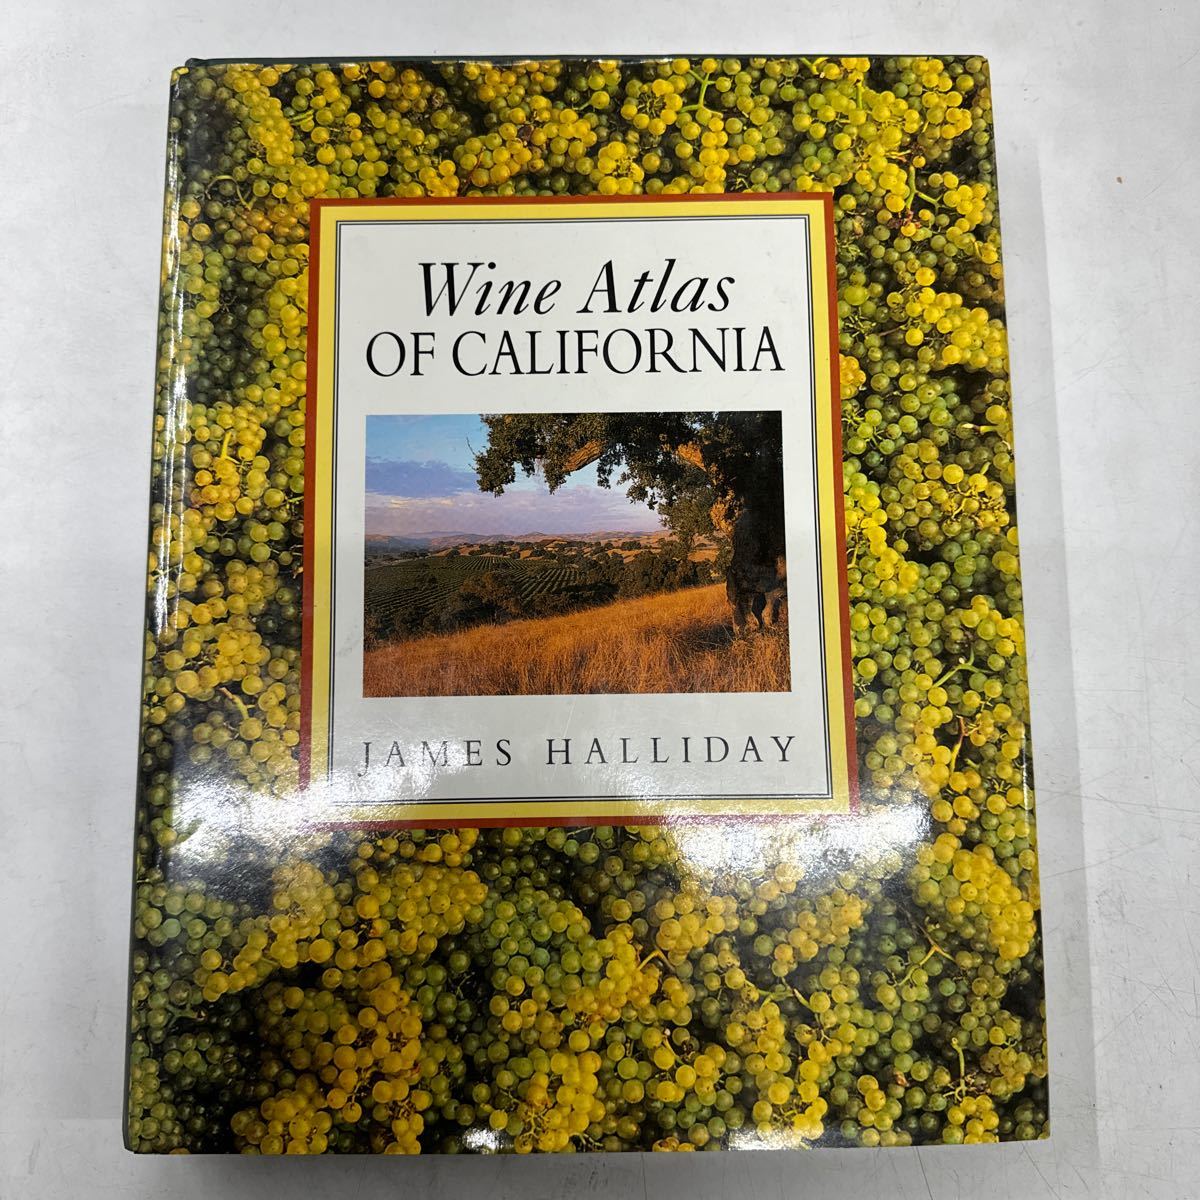 a0121-26.洋書 Wine Atlas of California 1冊 james halliday 図鑑 写真 ワイン wine 歴史 資料 装飾 小物 インテリア 大判